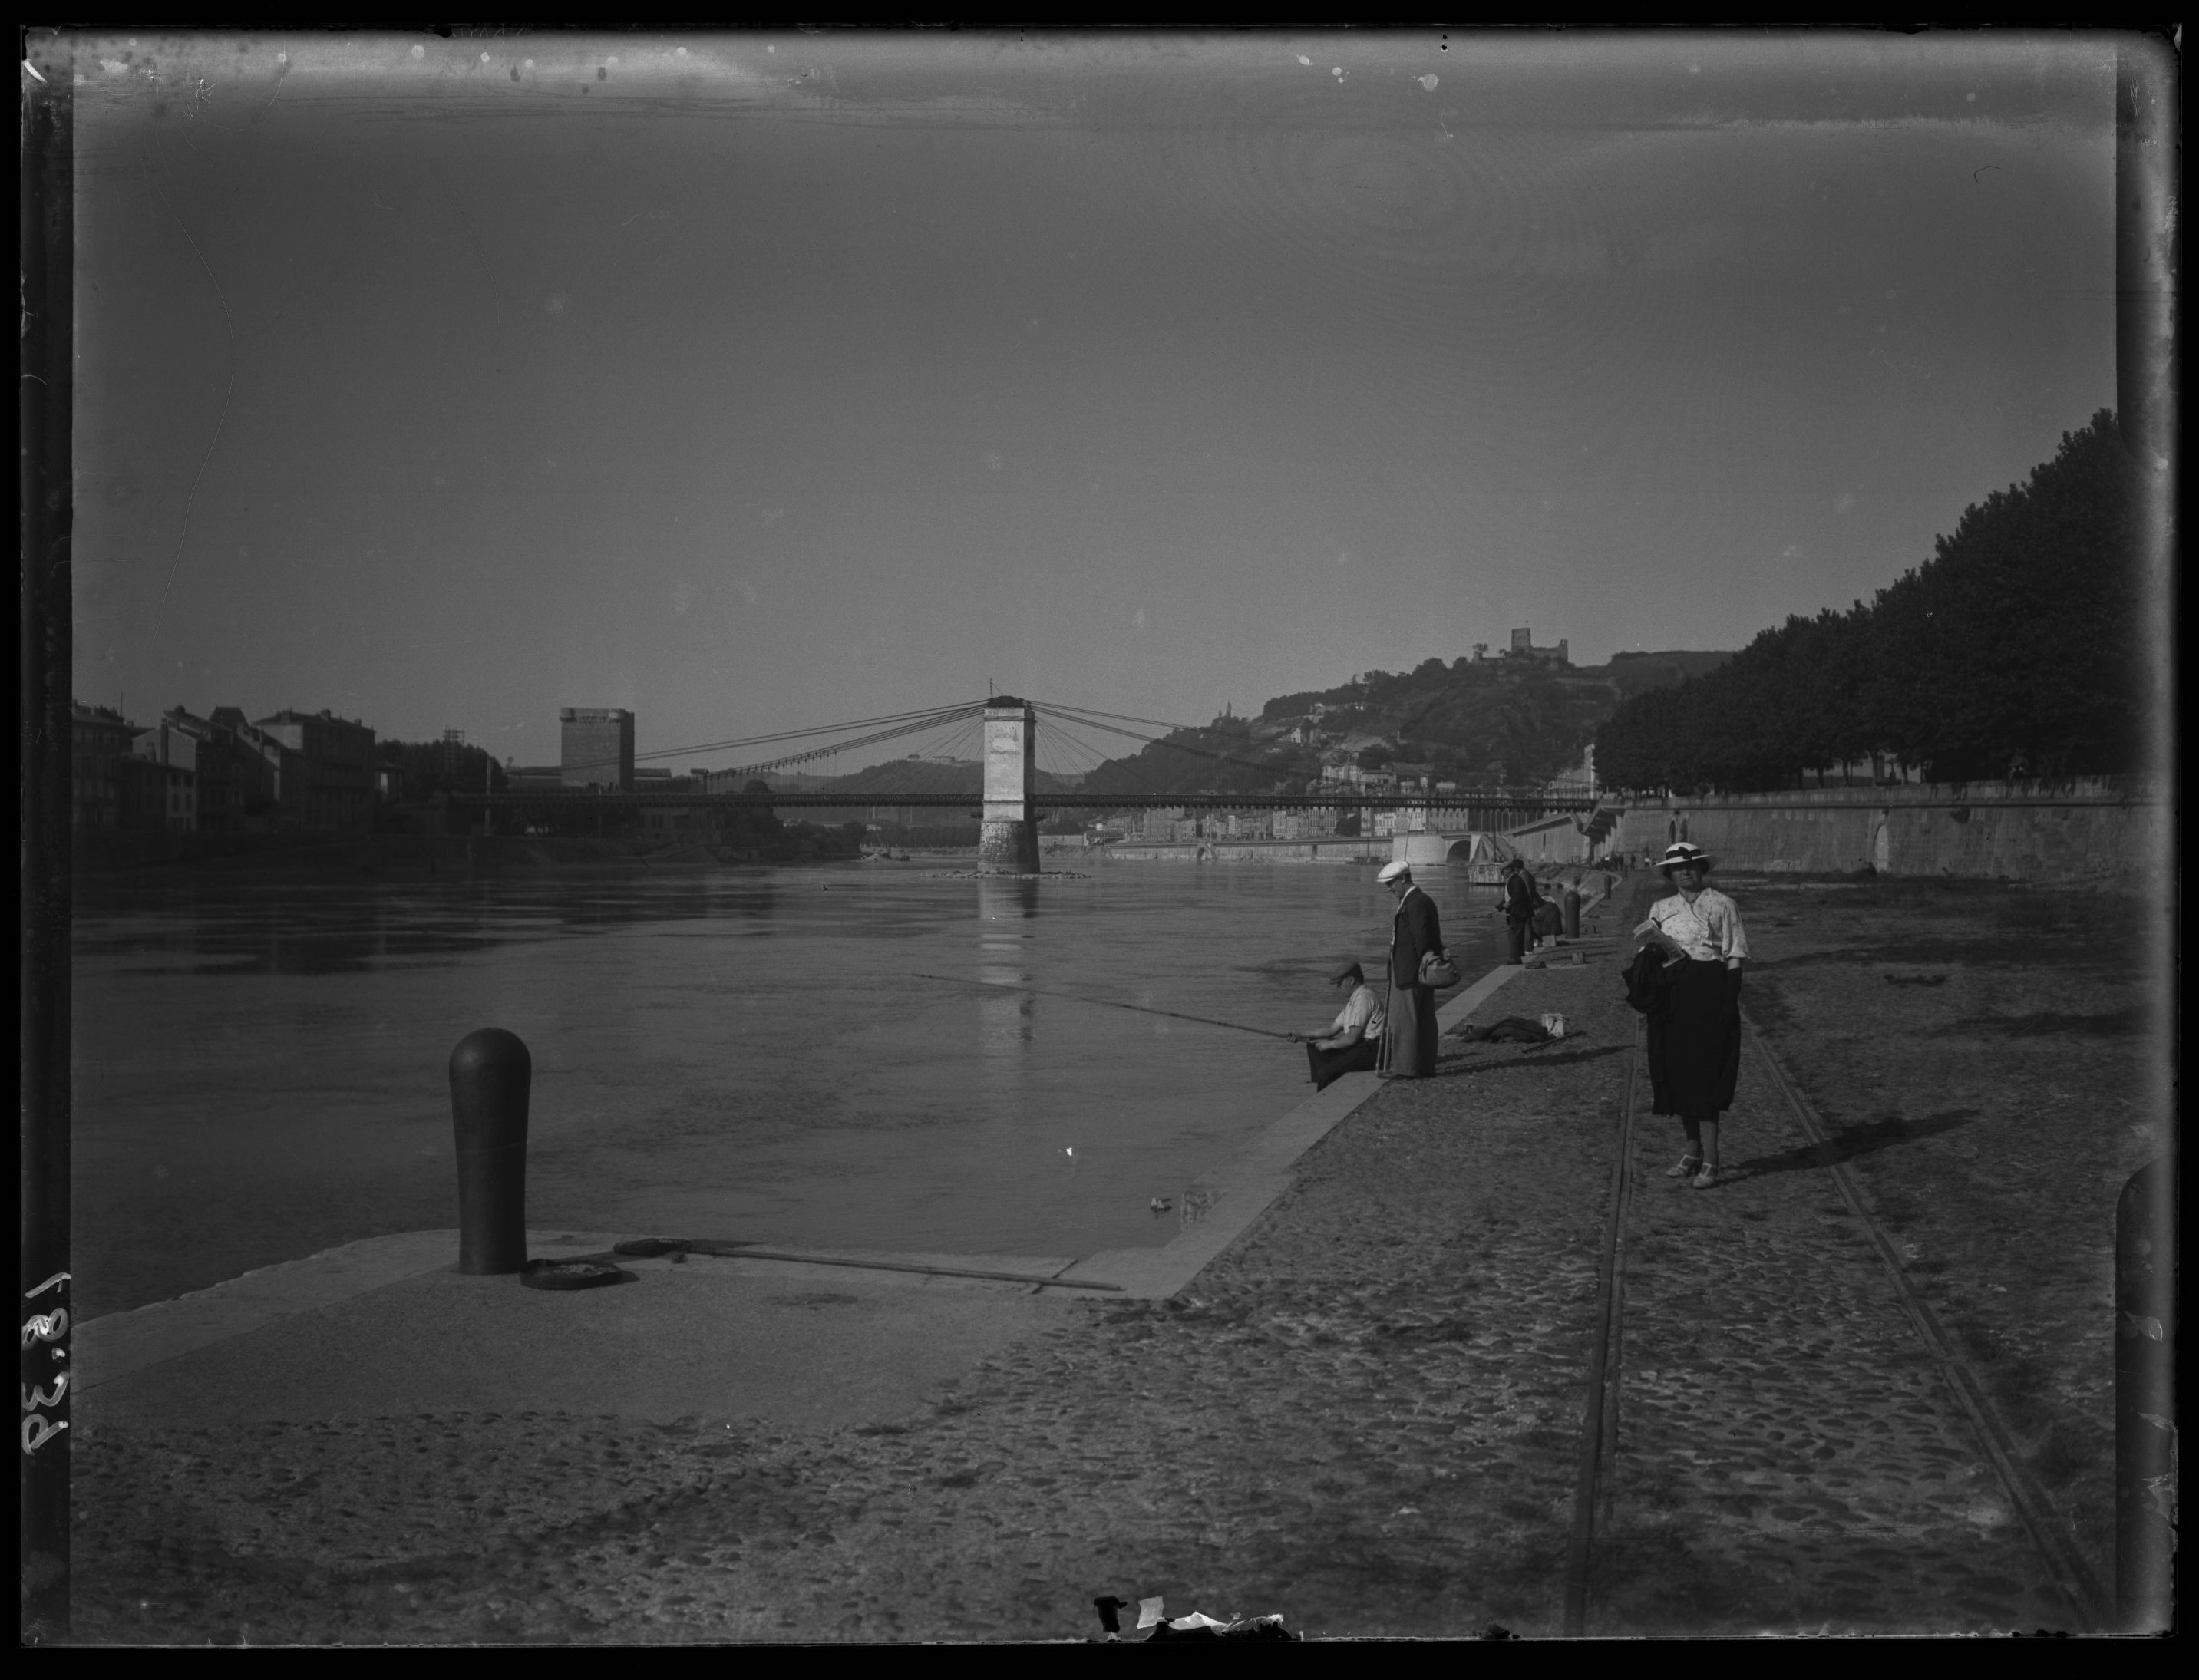 Paul Servant - <p>People in European dress walking and fishing by river, bridge in background</p>